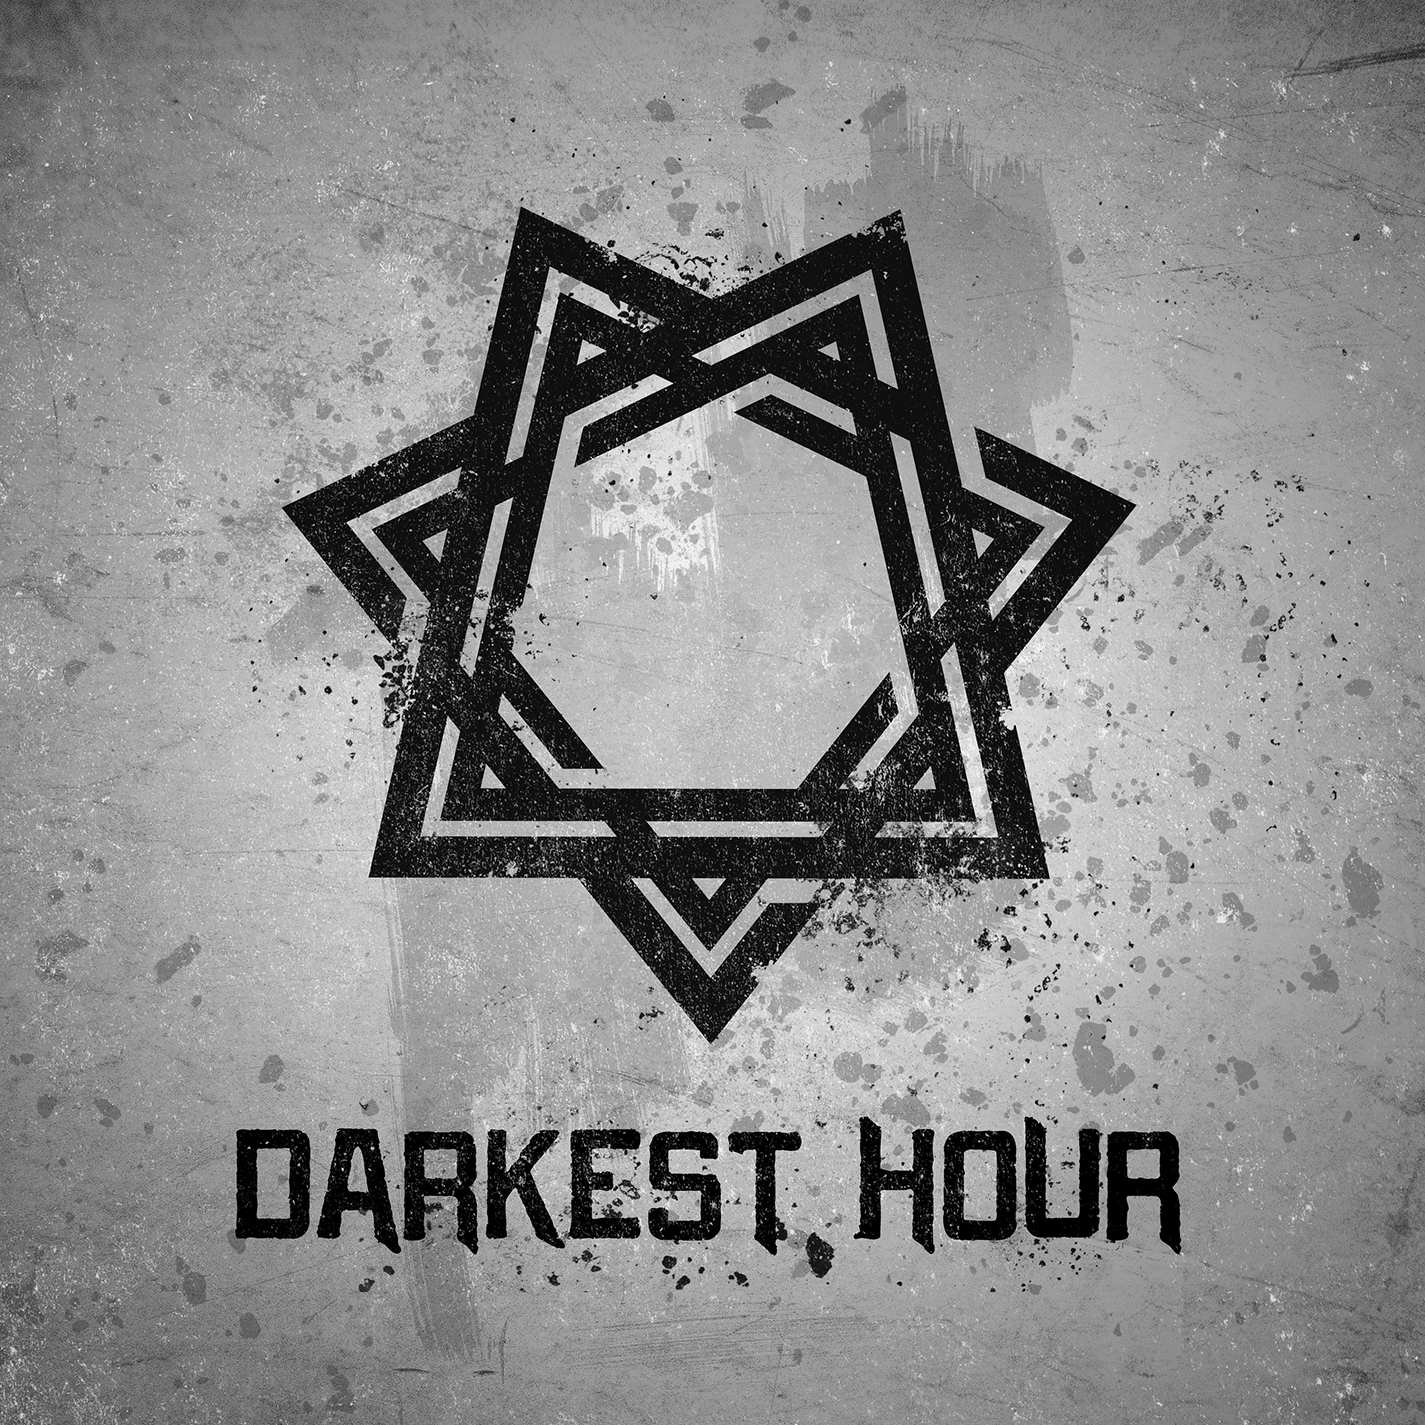 DarkestHour